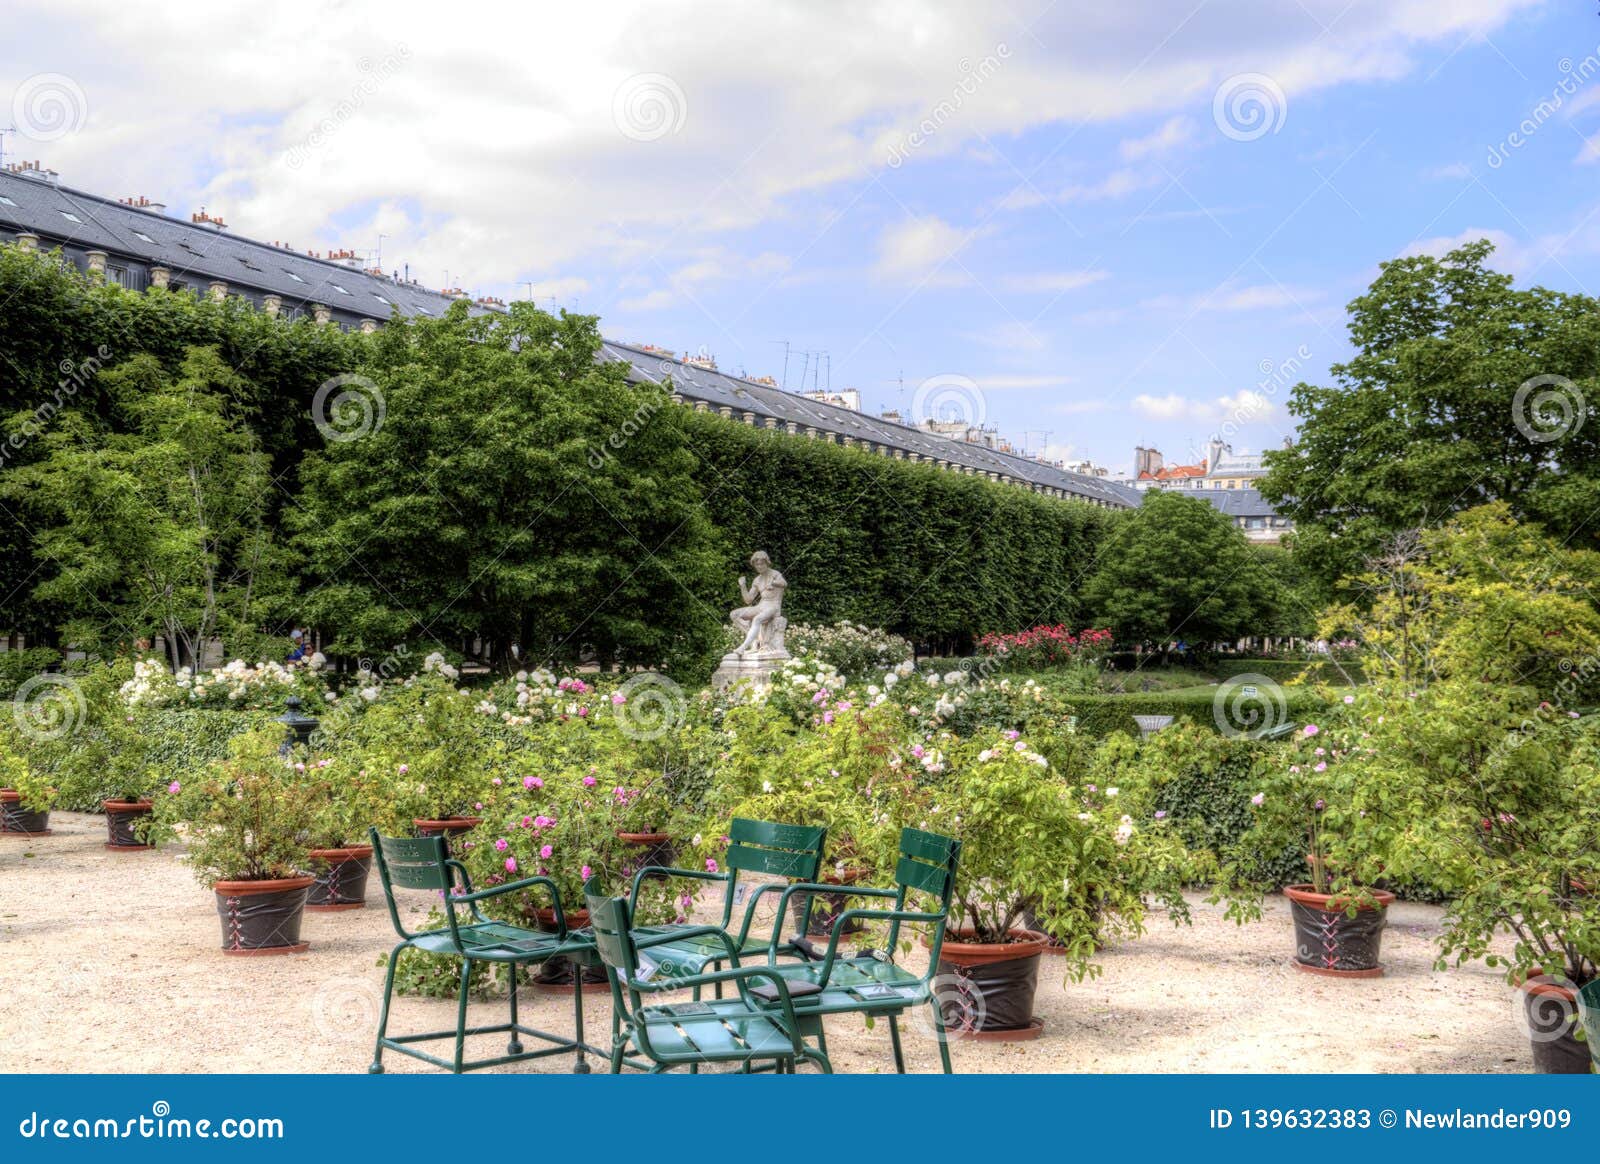 Palais Royal Garden In Center Of Paris France Stock Image Image